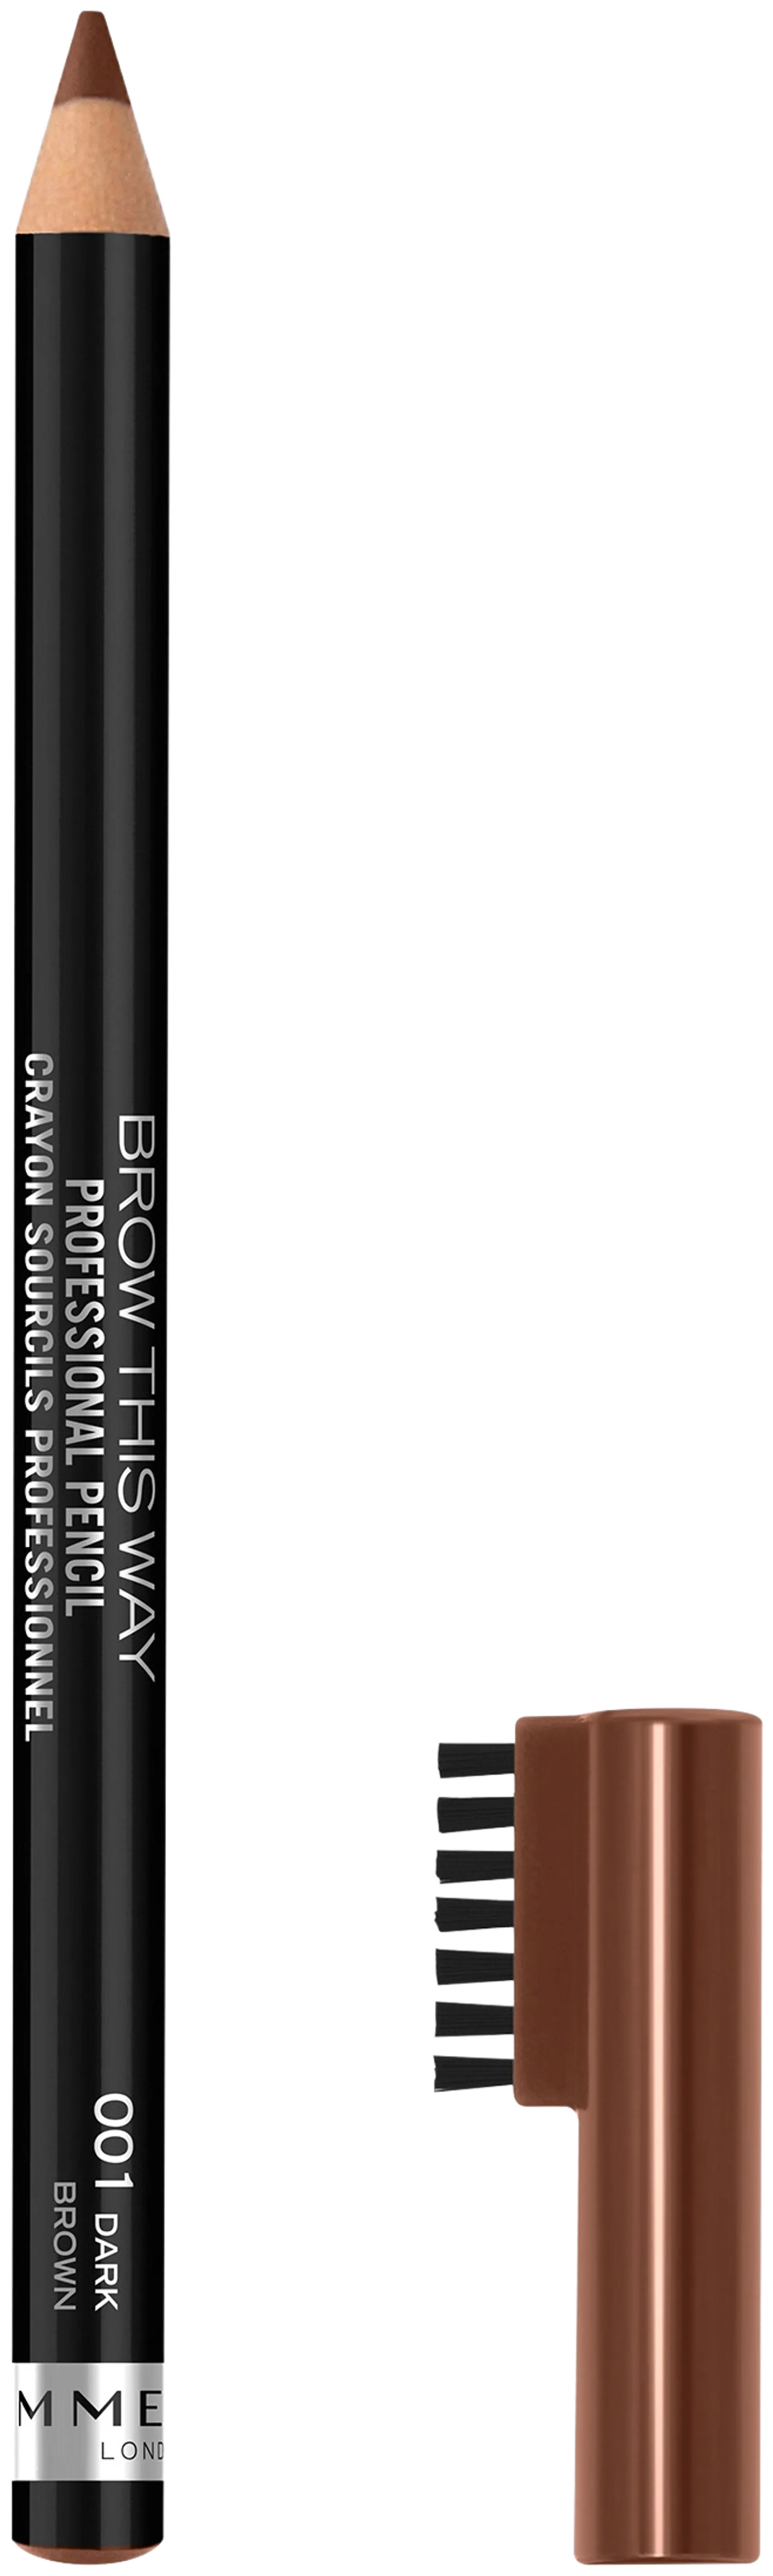 Rimmel 1,4g Professional Eyebrow Pencil 001 Dark Brown kulmakynä - 2